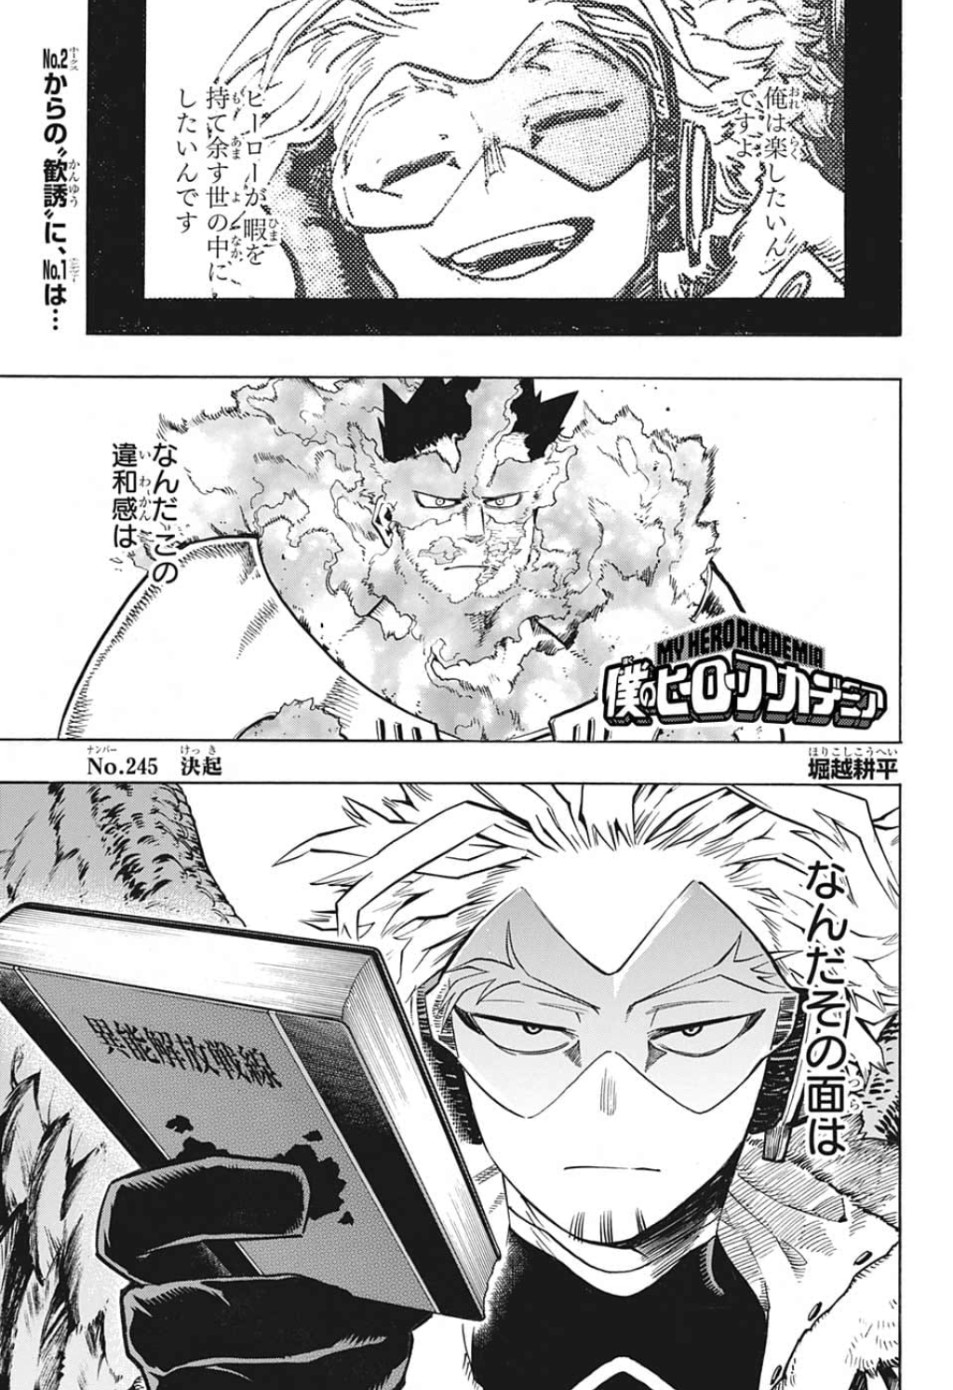 Boku no Hero Academia - Chapter 245 - Page 1